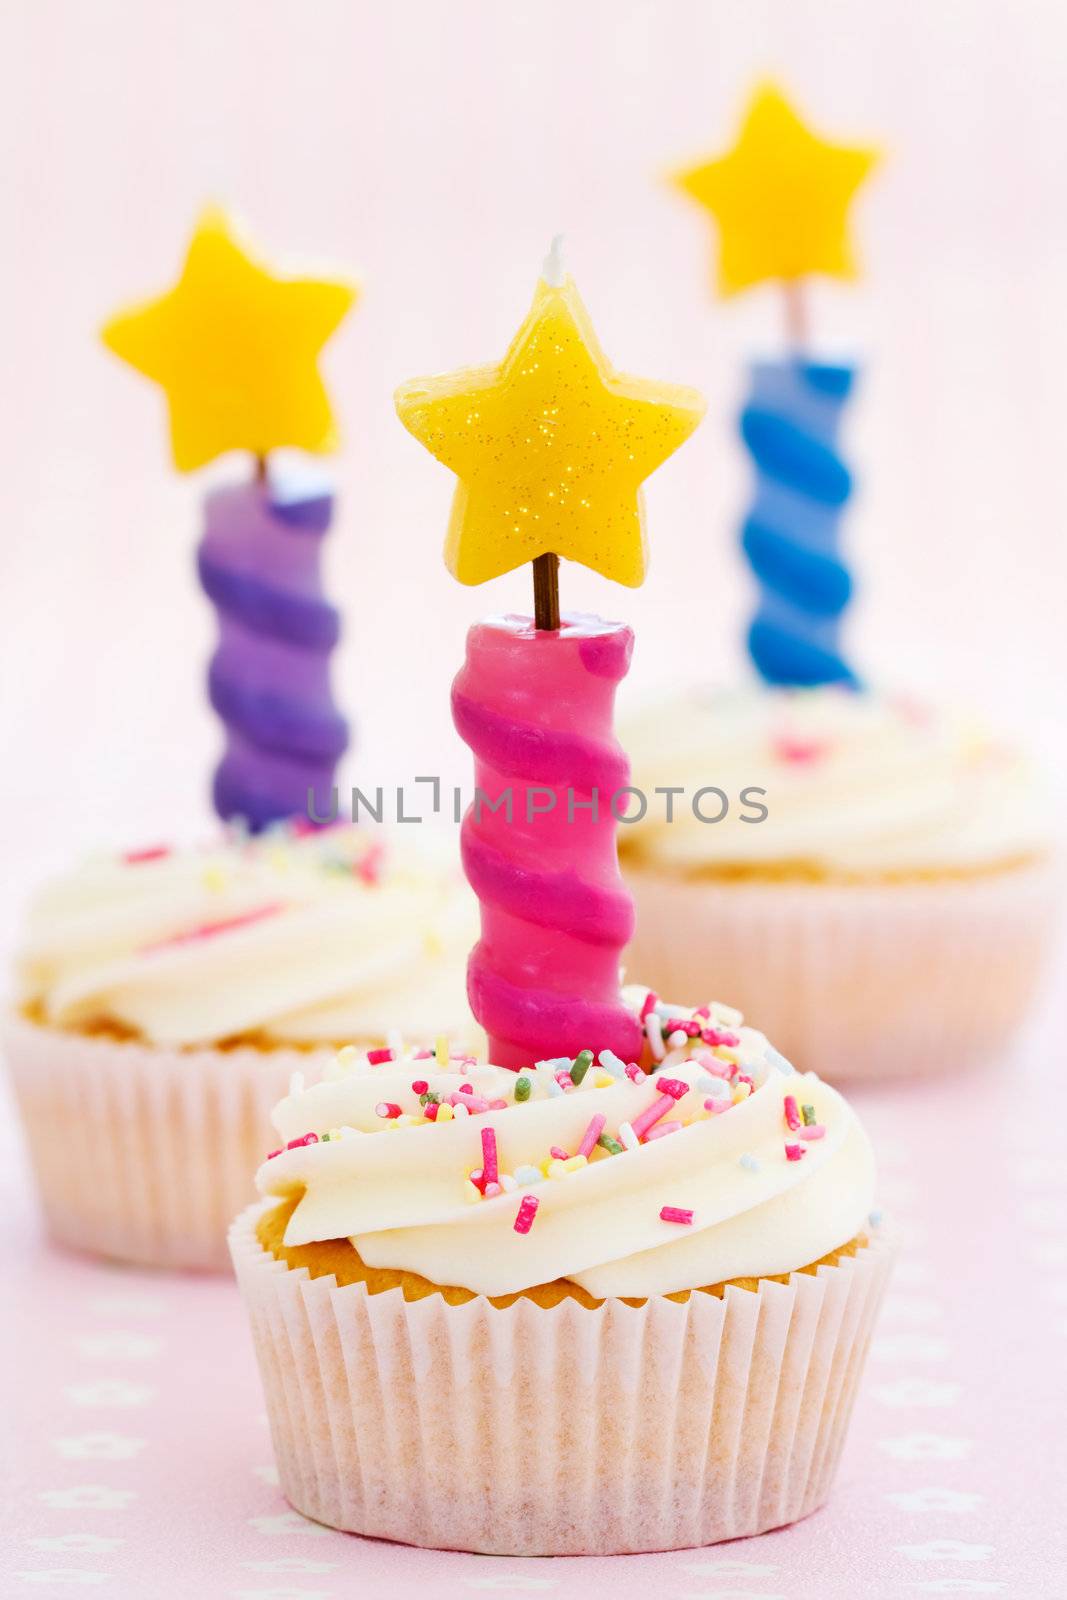 Three birthday cupcakes by RuthBlack